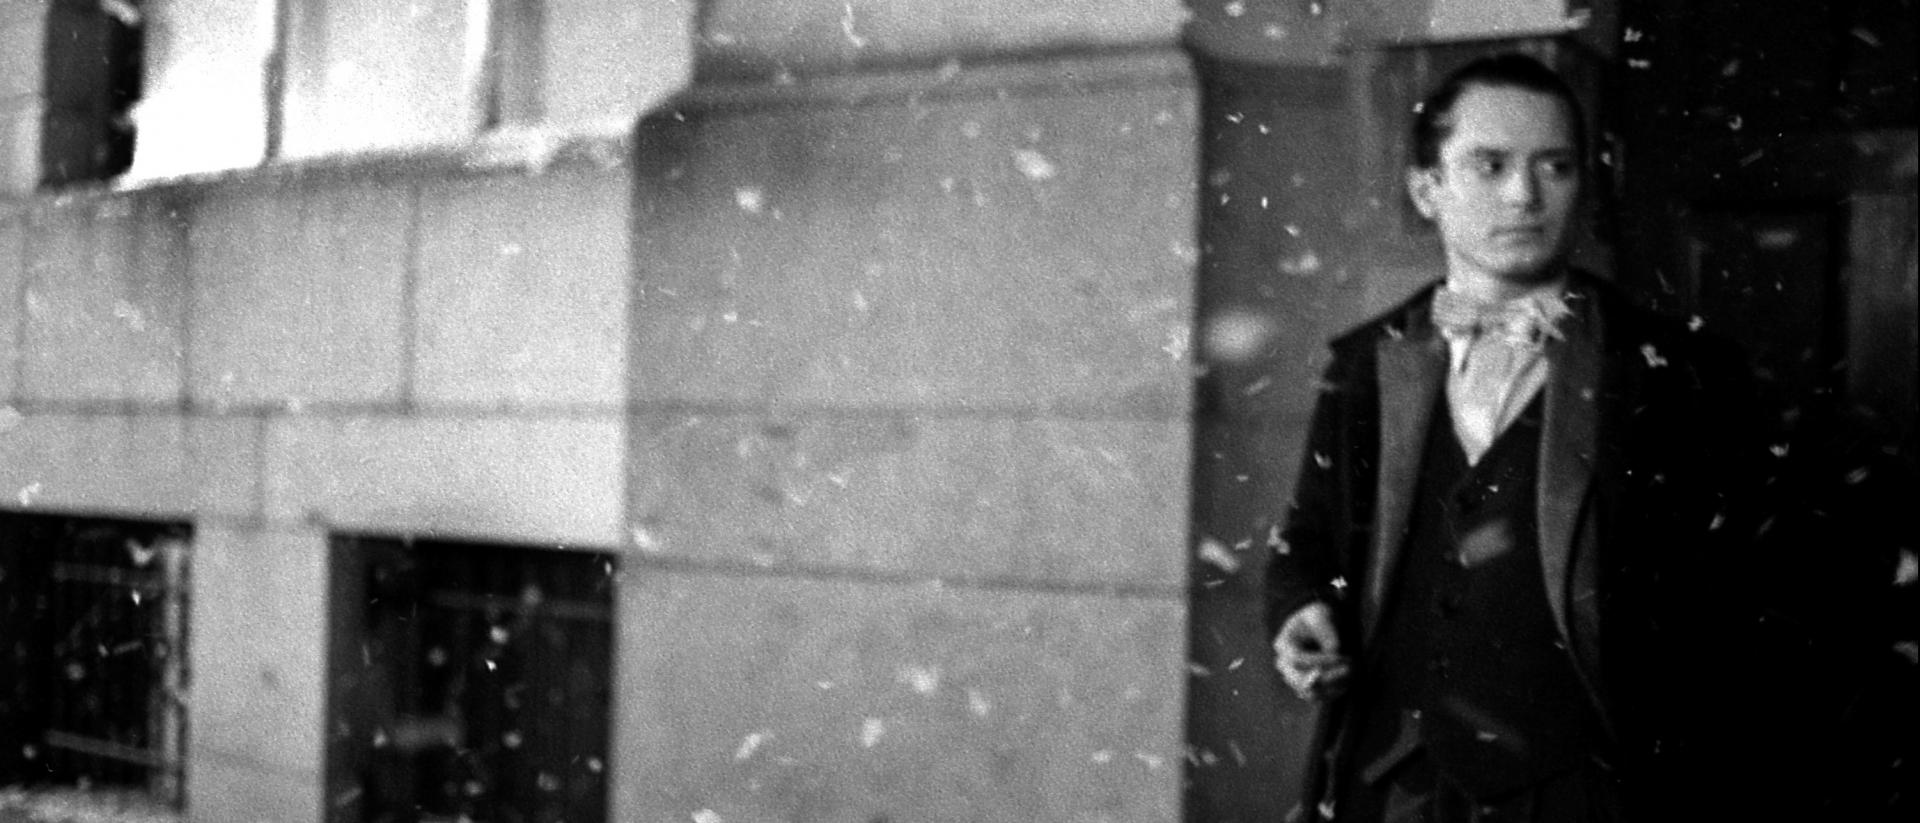 Elijah Wood in snowy New York